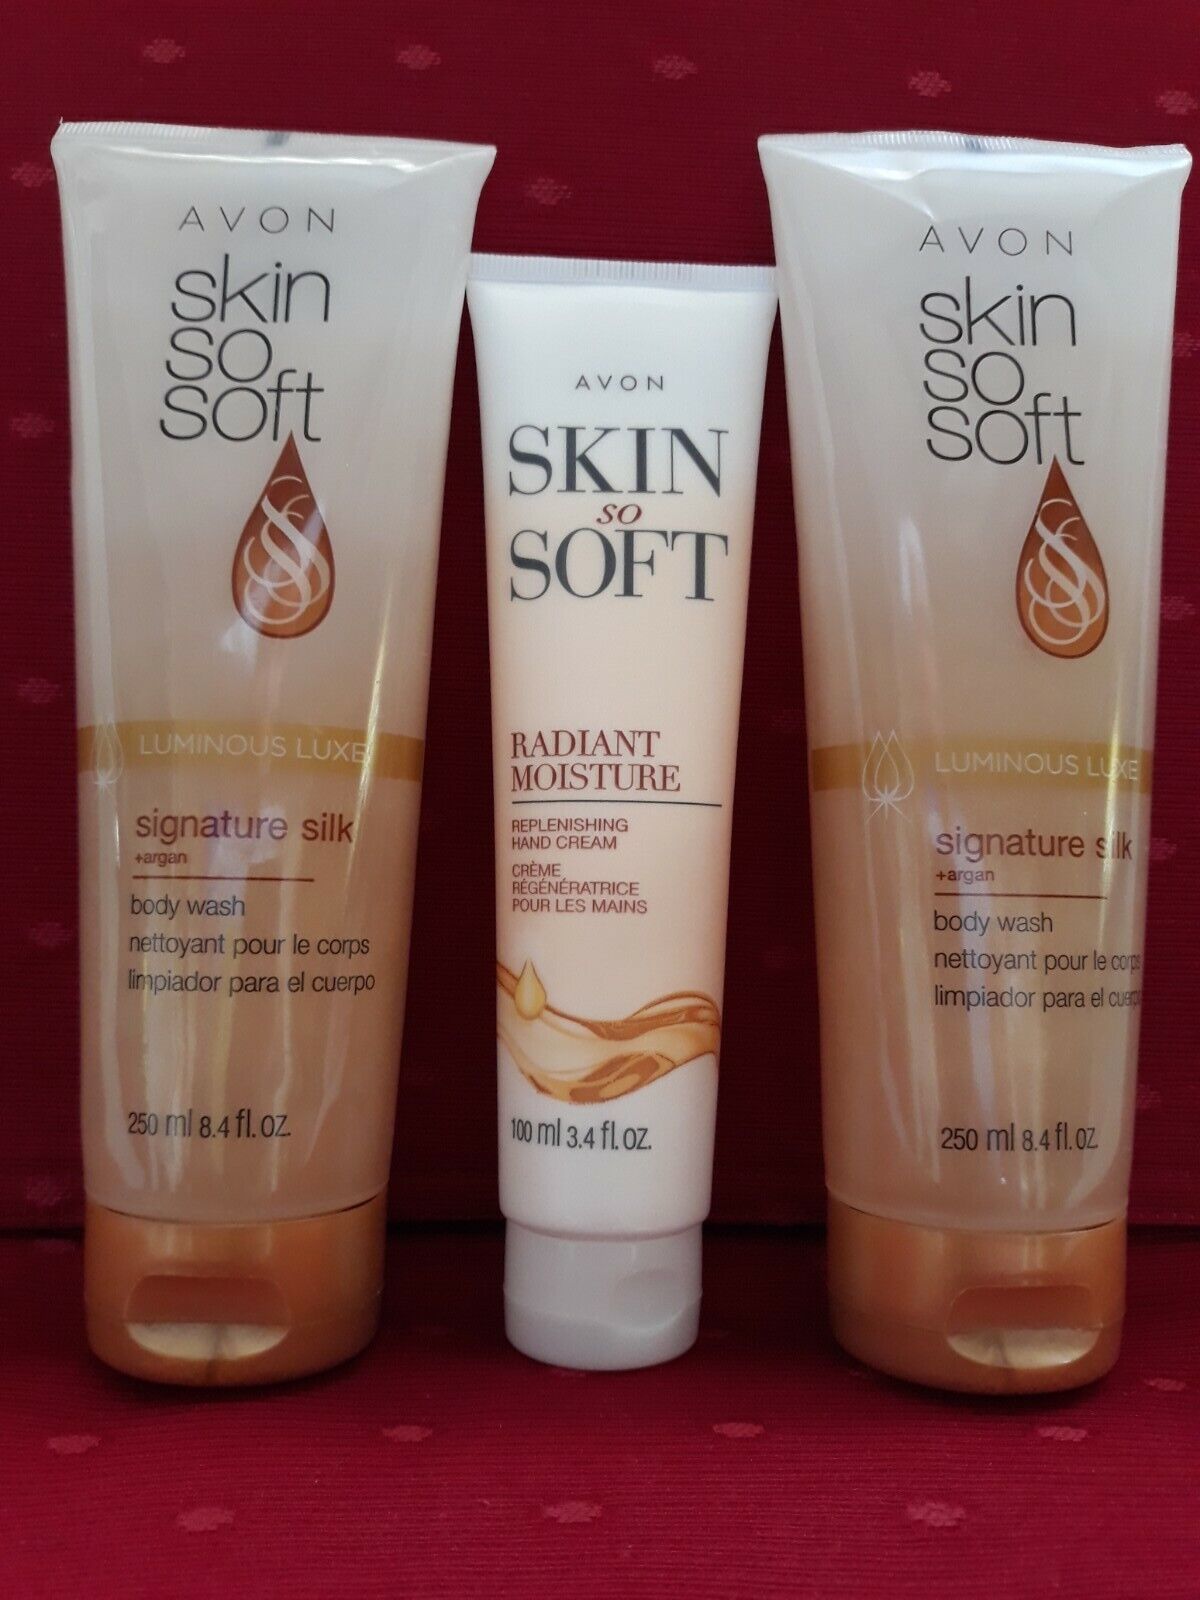 Primary image for Avon 2-Skin So Soft Luminous Luxe Signature Silk Body Wash & 1-(R.M) Hand Cream